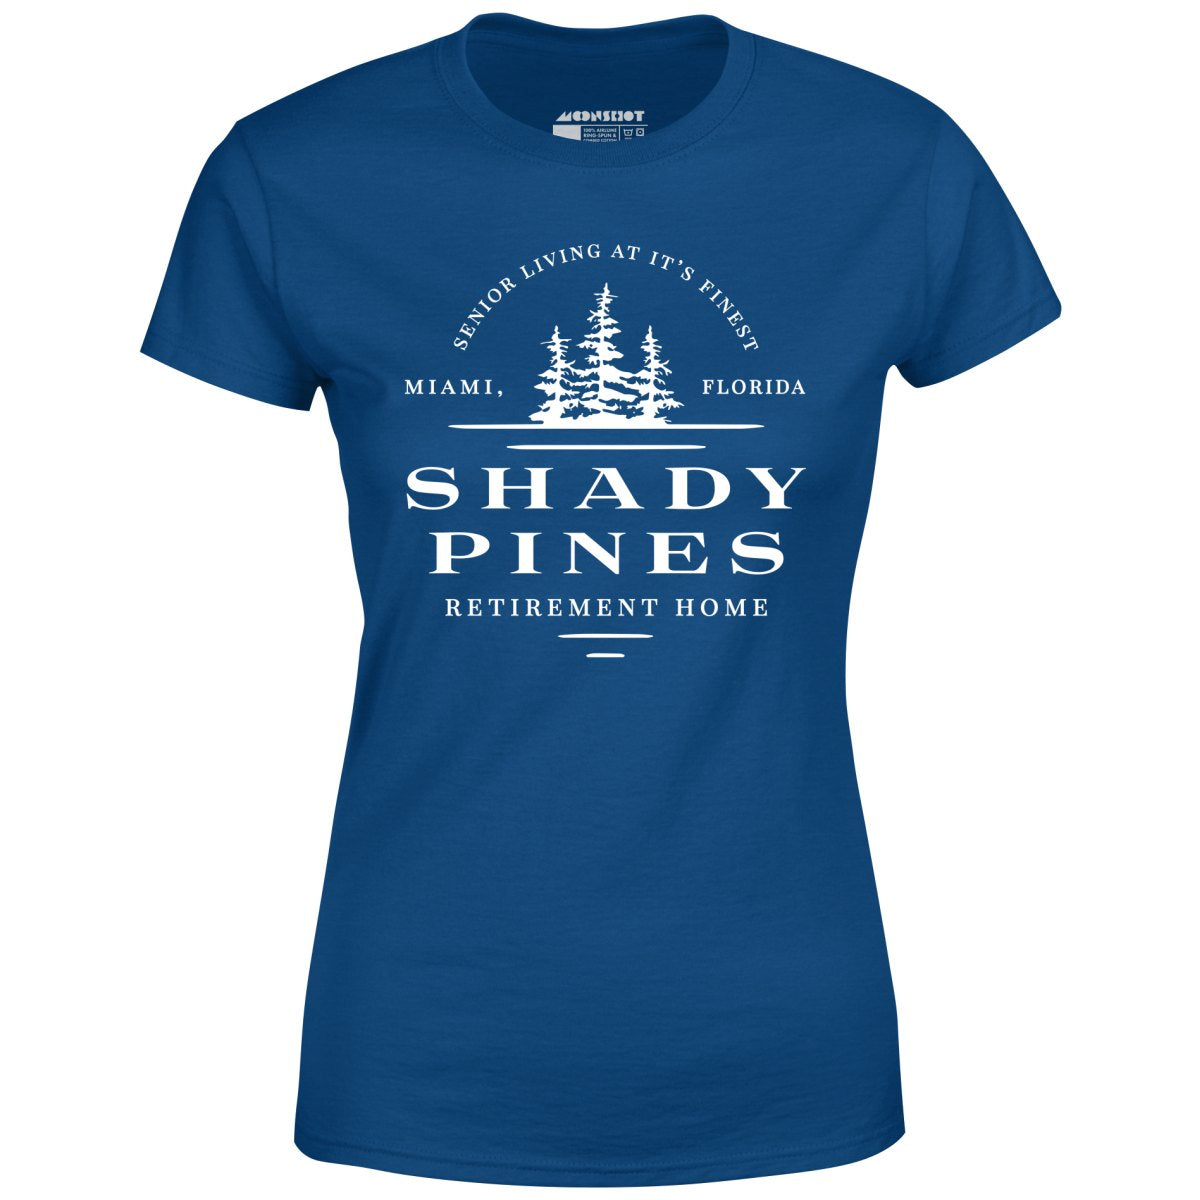 Shady Pines Retirement Home - Women's T-Shirt